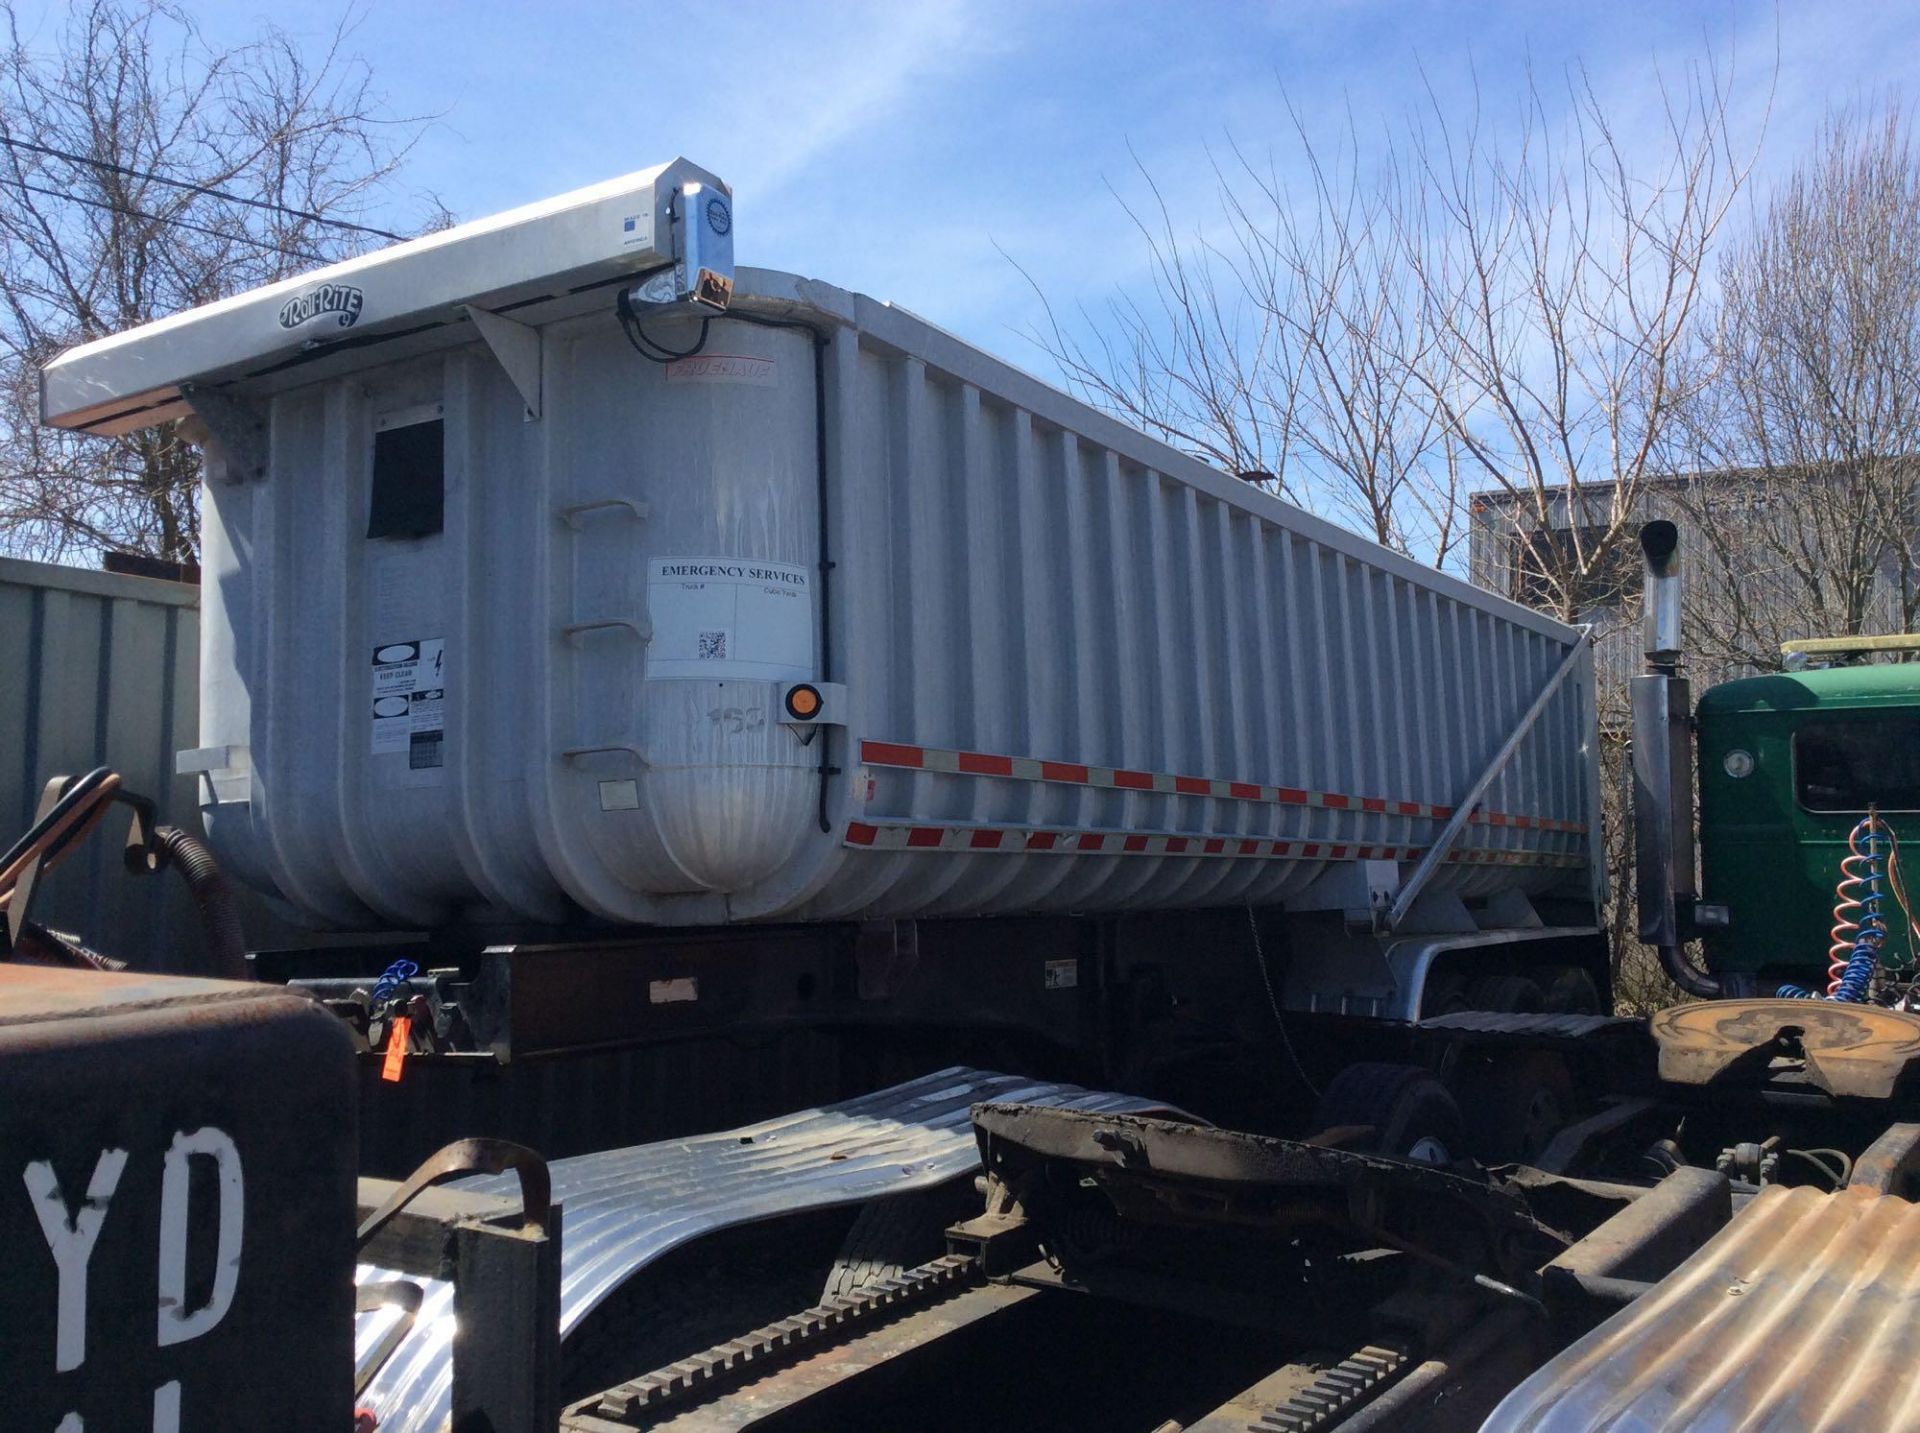 2000 Fruehauf triaxle Dump trailer, VIN 1JJU273F6YS699761 (LOCATED HARRISON AVE)